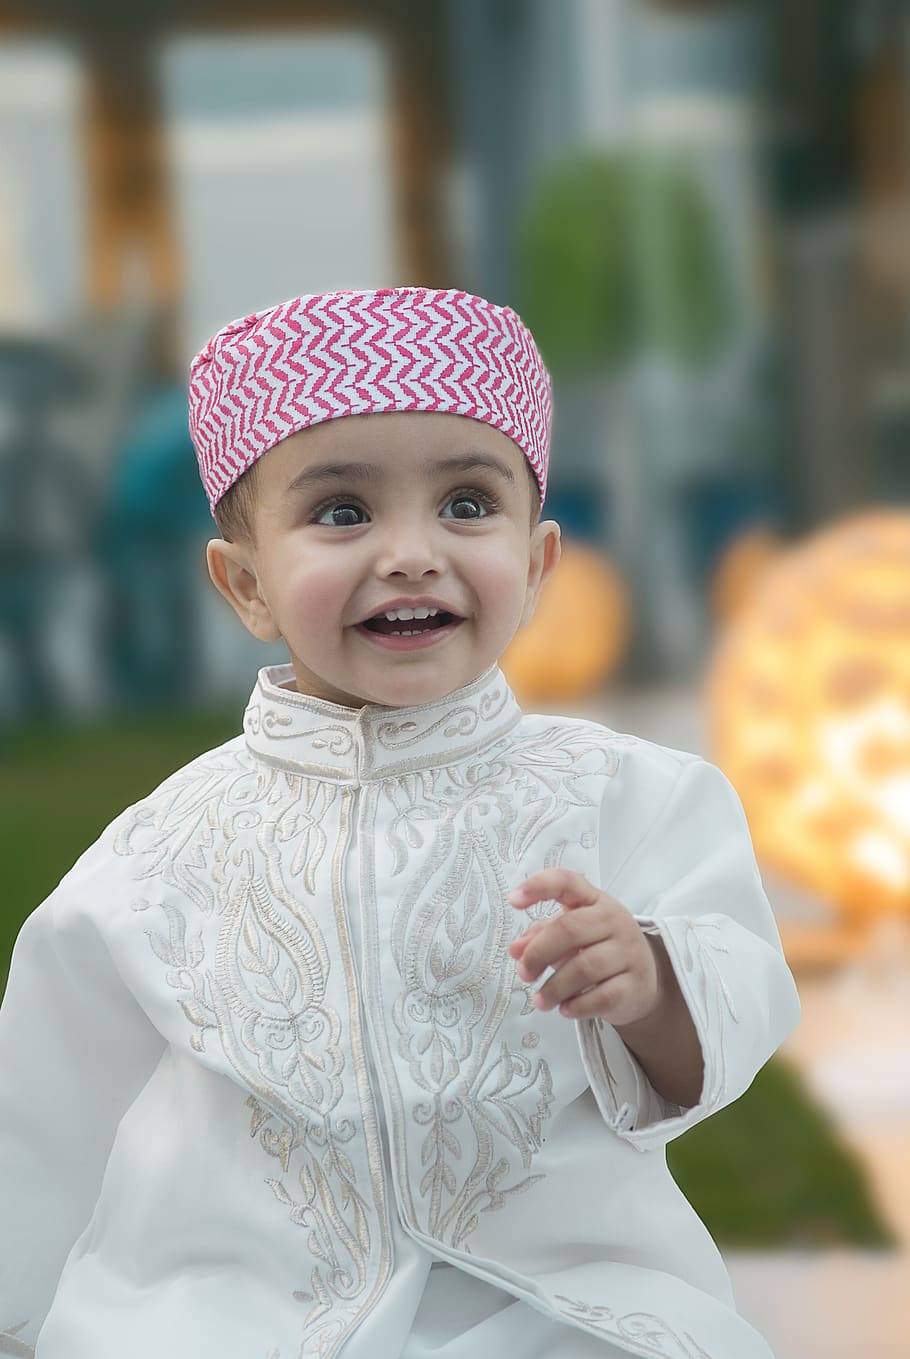 kids, eid mubarak, muslim, cute, kid, child, culture, portrait, smiling, smile